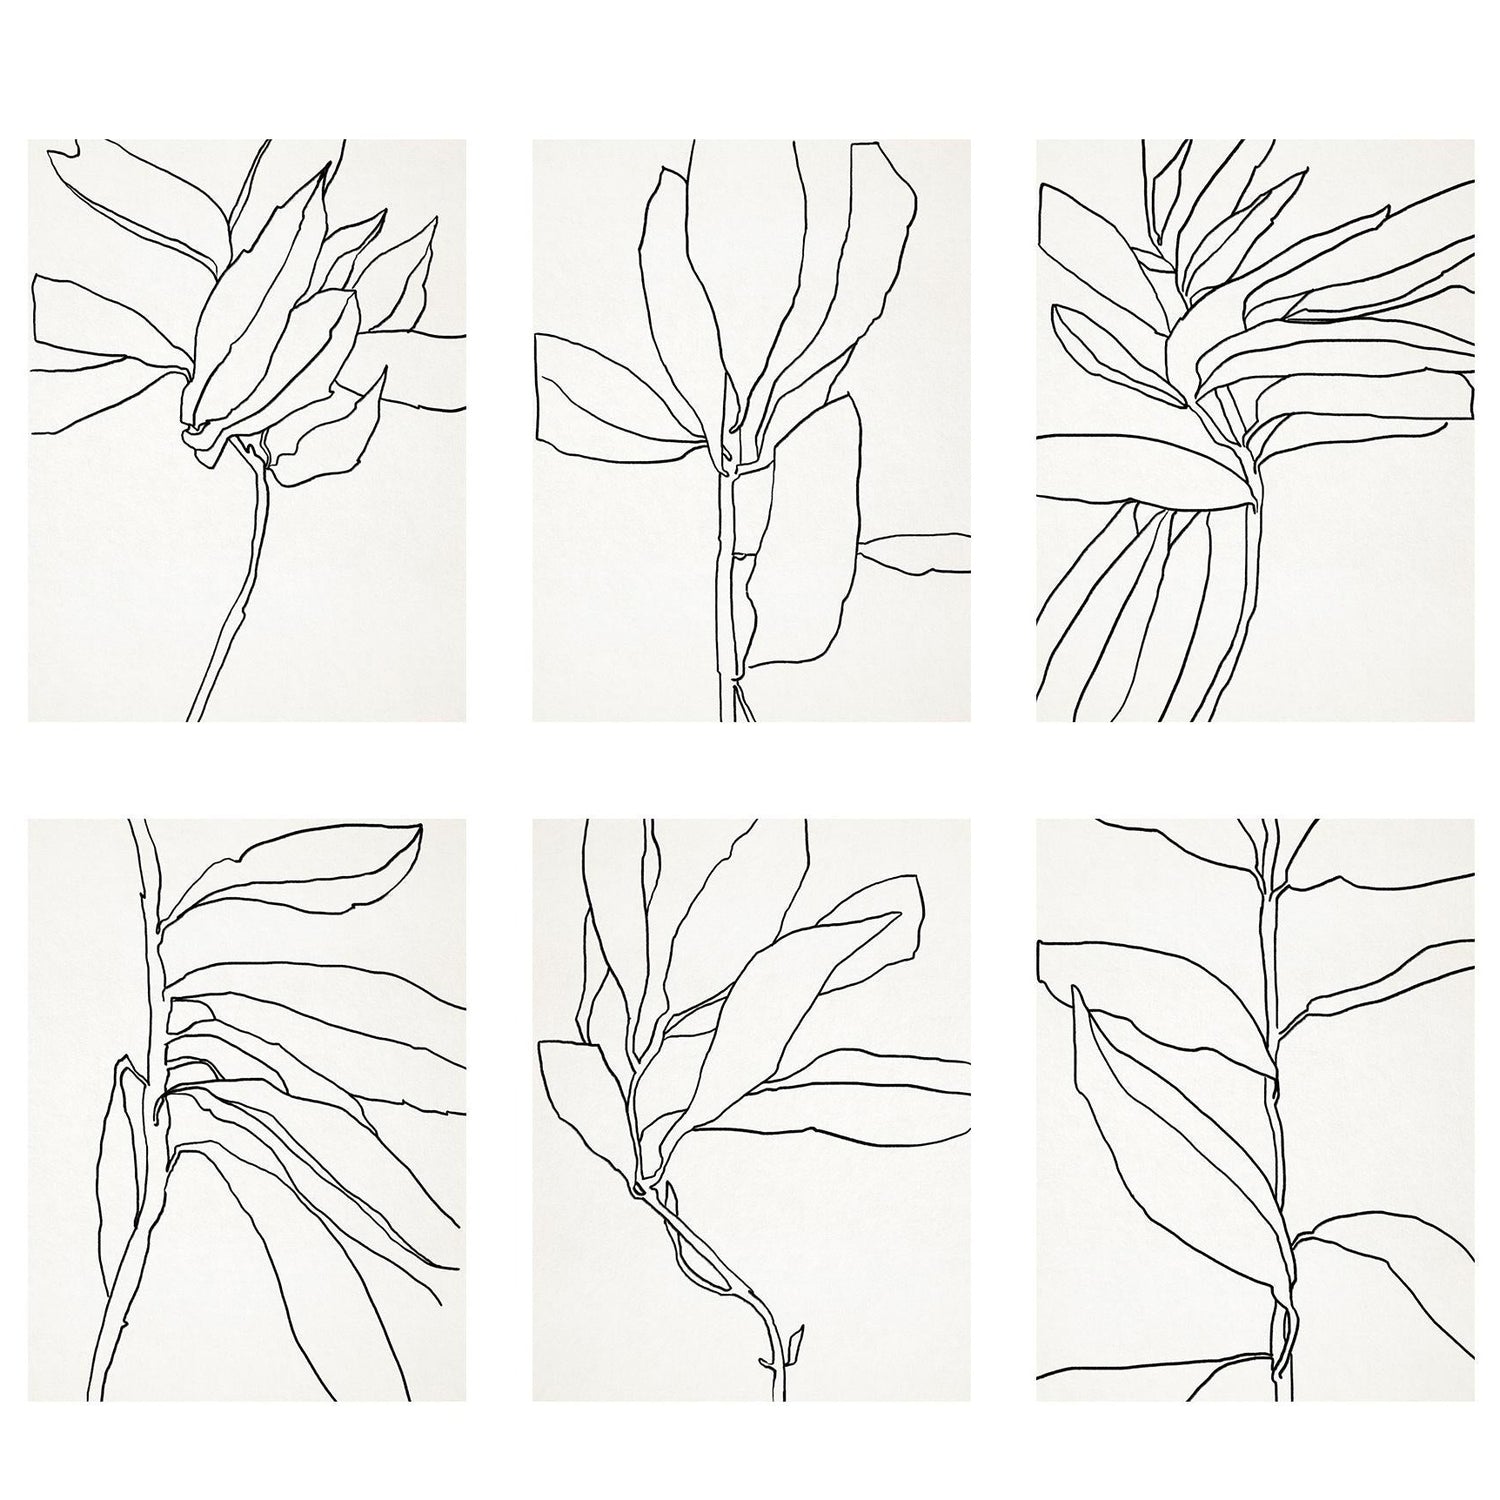 Botanical illustrations, framed prints, anna pepe, giclee print, forn studio